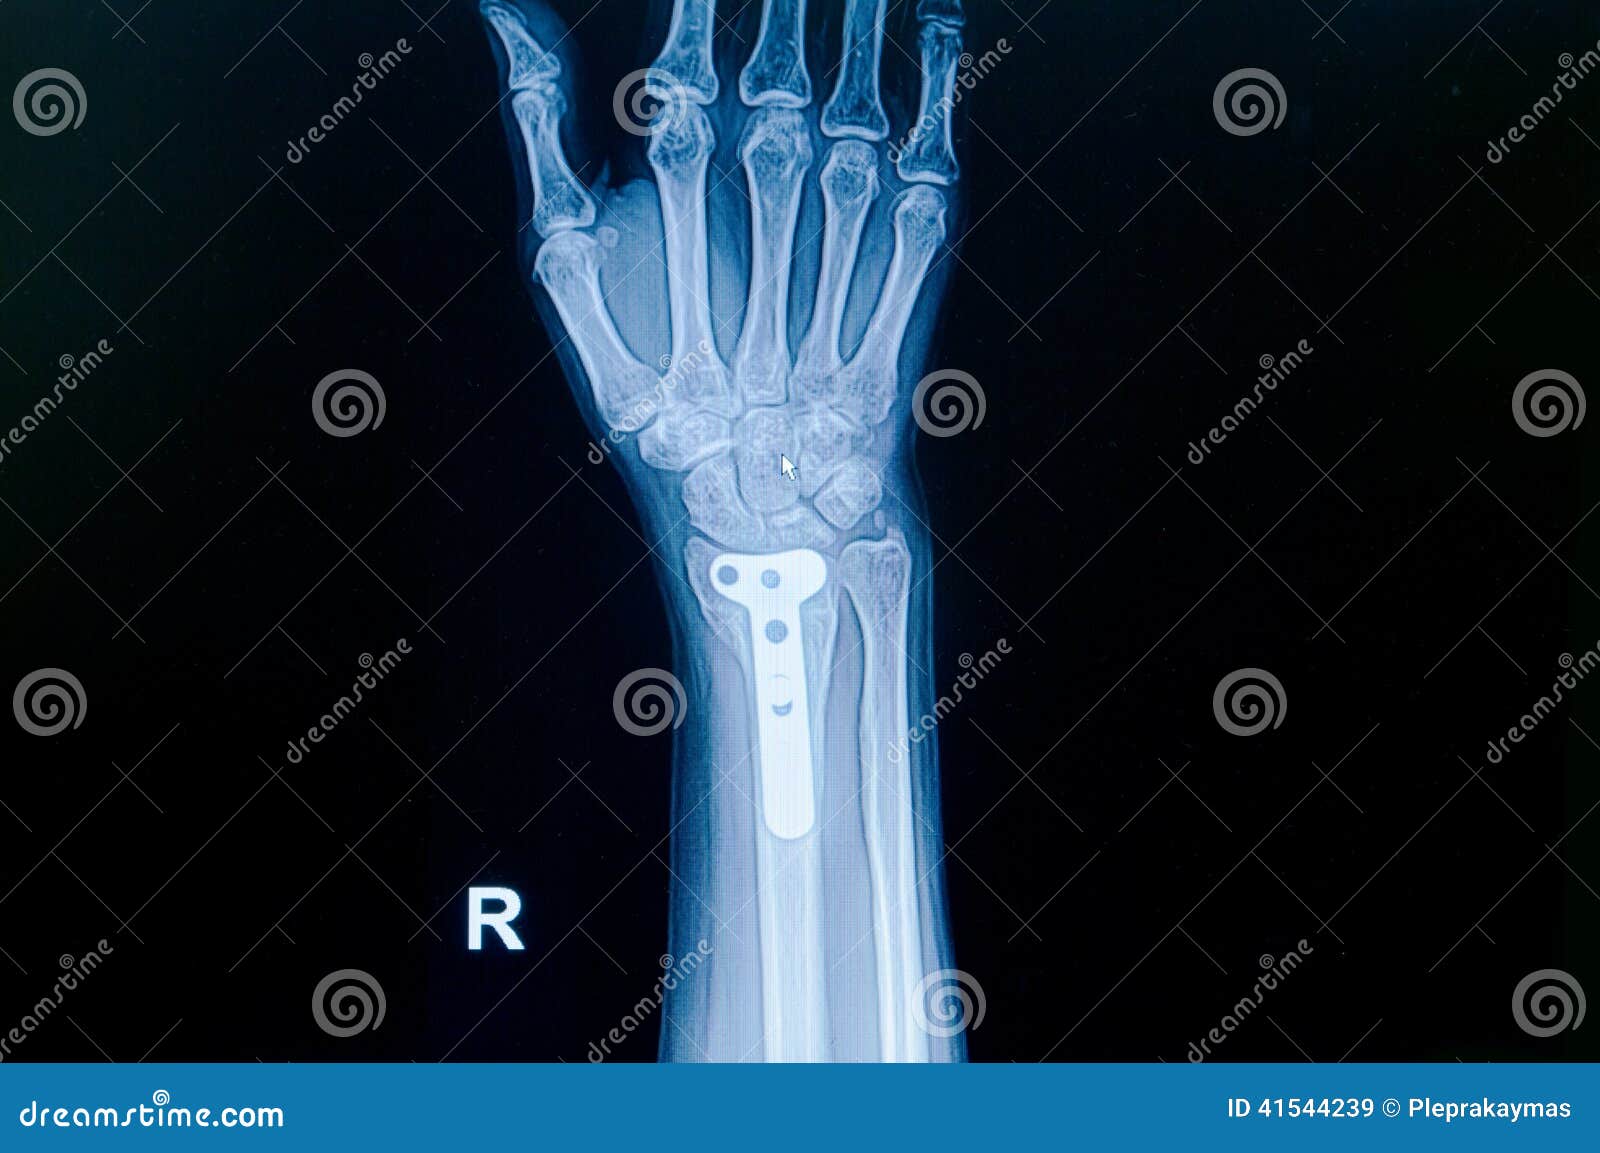 film x-ray wrist fracture : show fracture distal radius